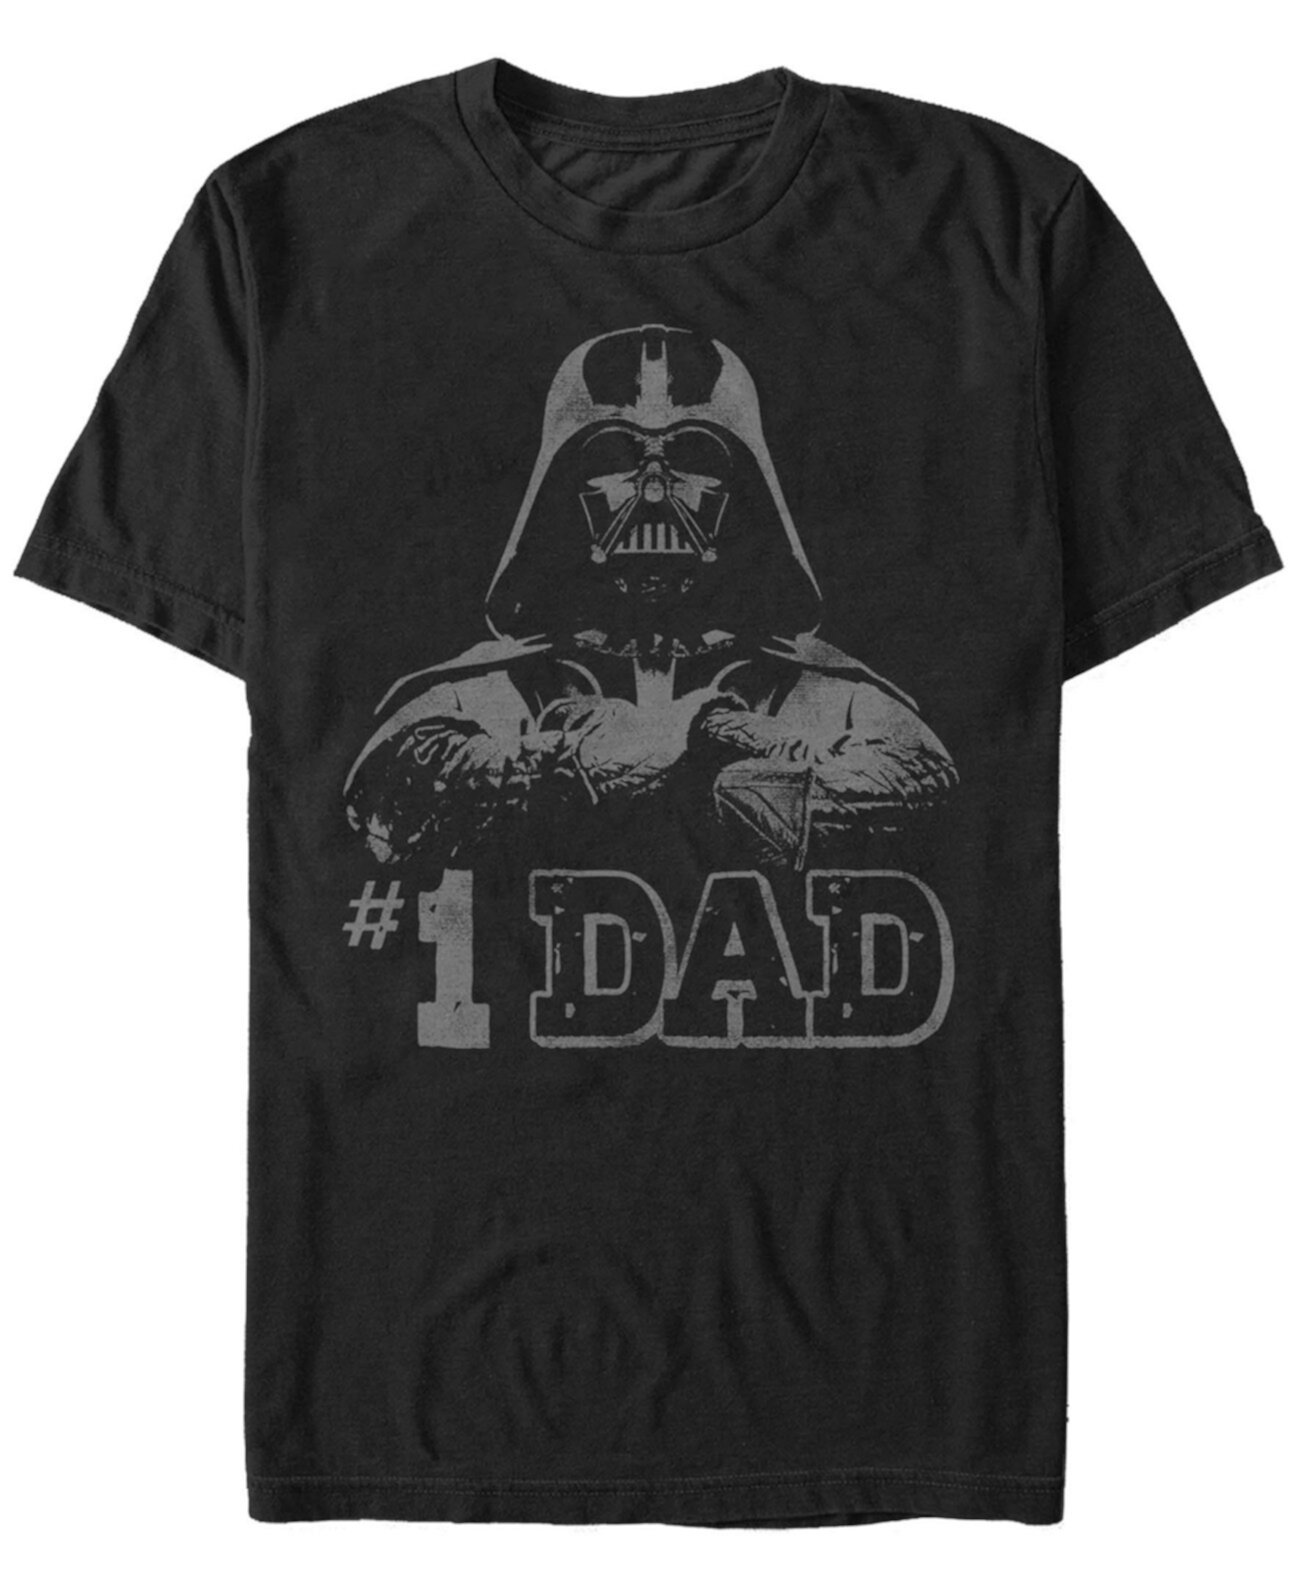 Мужская футболка Star Wars Vader 1 Dad Retro с короткими рукавами FIFTH SUN